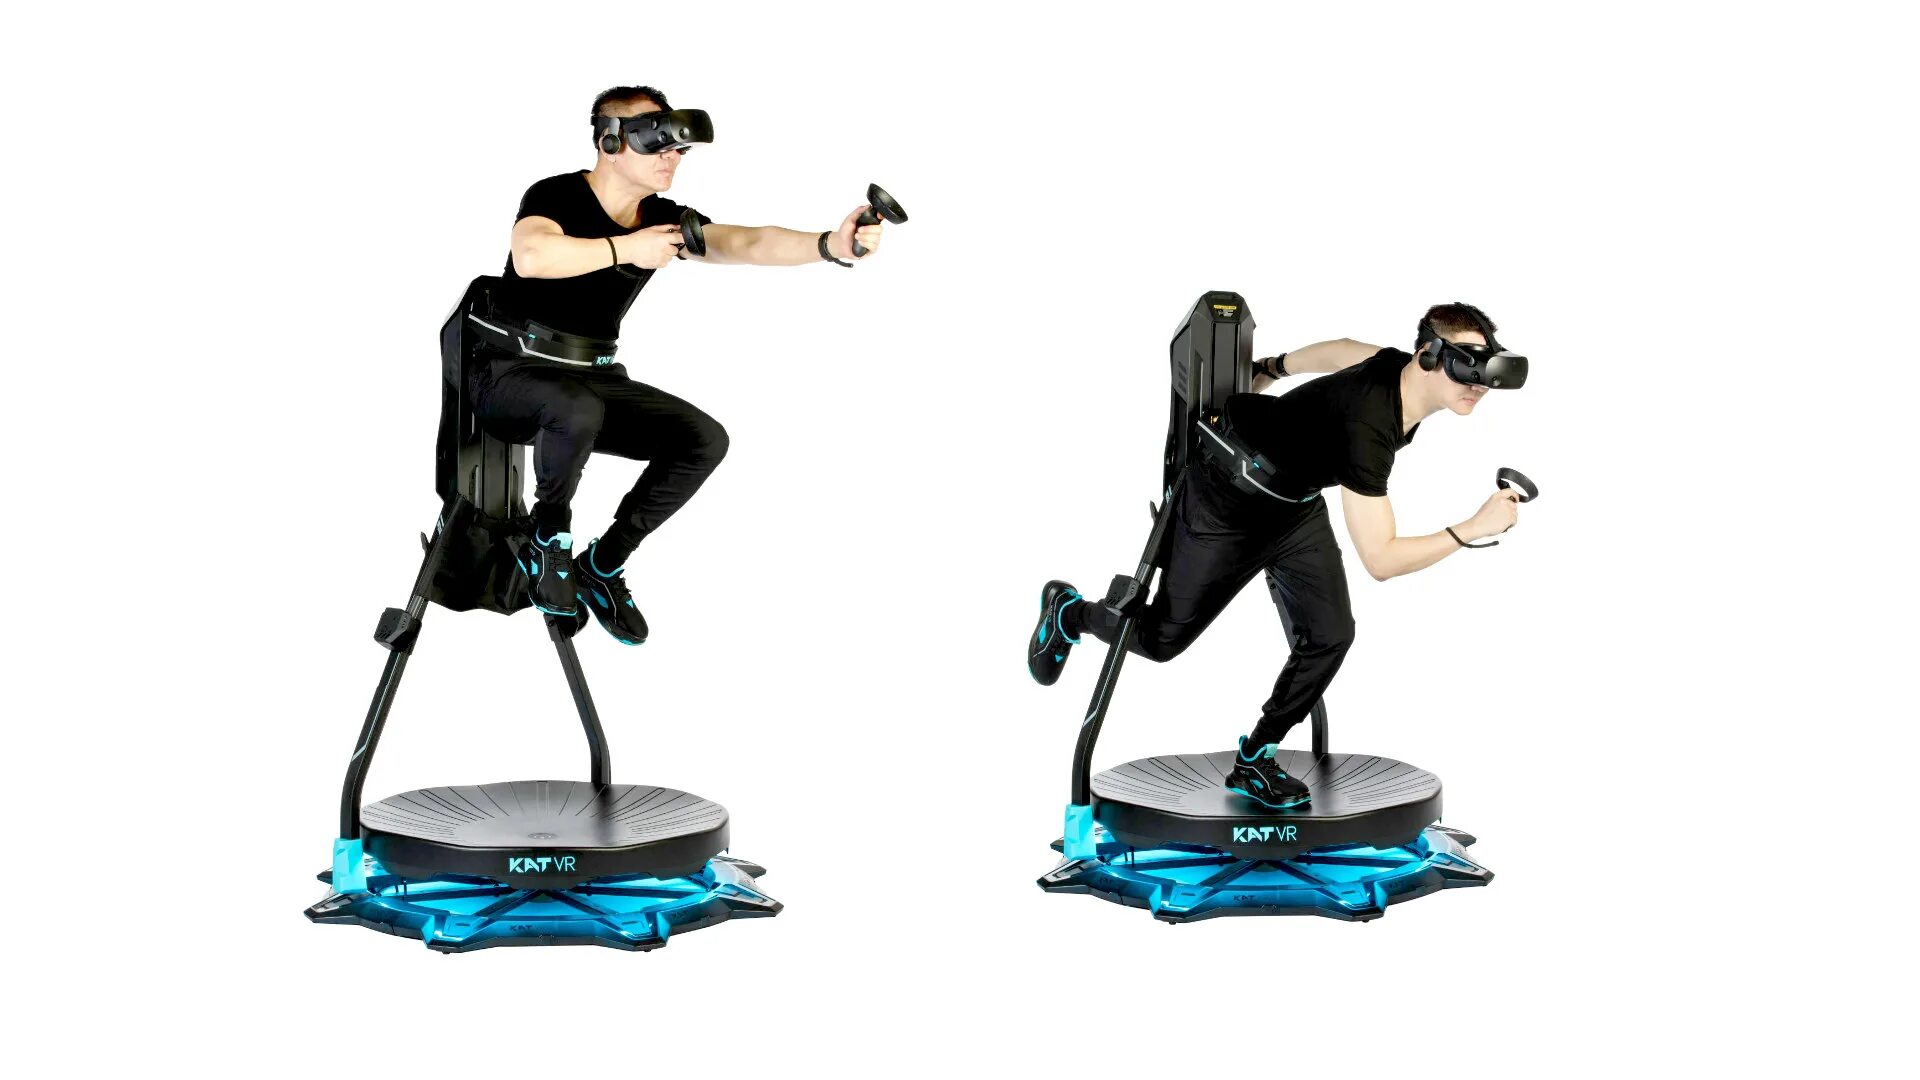 Kat vr. Беговая дорожка VR kat walk c. VR платформа kat walk VR. Беговая VR платформа kat walk Mini. Беговая платформа Virtuix Omni.